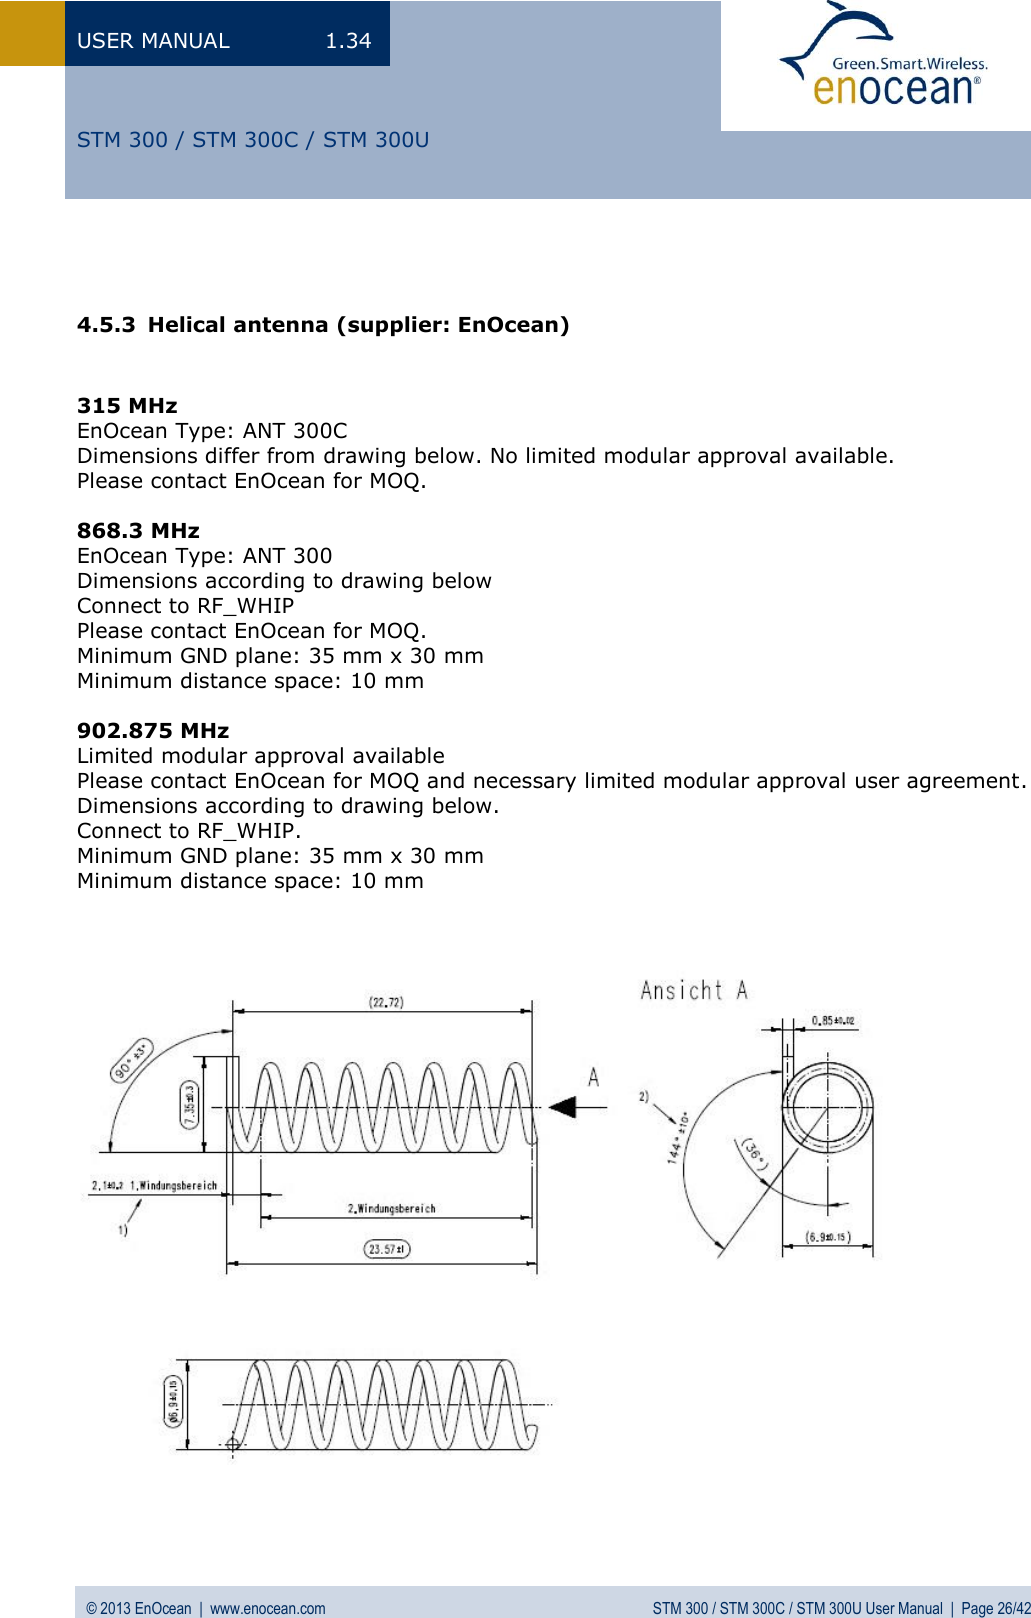 USER MANUAL  1.34 © 2013 EnOcean  |  www.enocean.com  STM 300 / STM 300C / STM 300U User Manual  |  Page 26/42   STM 300 / STM 300C / STM 300U   4.5.3 Helical antenna (supplier: EnOcean)   315 MHz EnOcean Type: ANT 300C Dimensions differ from drawing below. No limited modular approval available. Please contact EnOcean for MOQ.    868.3 MHz EnOcean Type: ANT 300 Dimensions according to drawing below Connect to RF_WHIP  Please contact EnOcean for MOQ. Minimum GND plane: 35 mm x 30 mm Minimum distance space: 10 mm  902.875 MHz Limited modular approval available Please contact EnOcean for MOQ and necessary limited modular approval user agreement. Dimensions according to drawing below. Connect to RF_WHIP. Minimum GND plane: 35 mm x 30 mm Minimum distance space: 10 mm                         